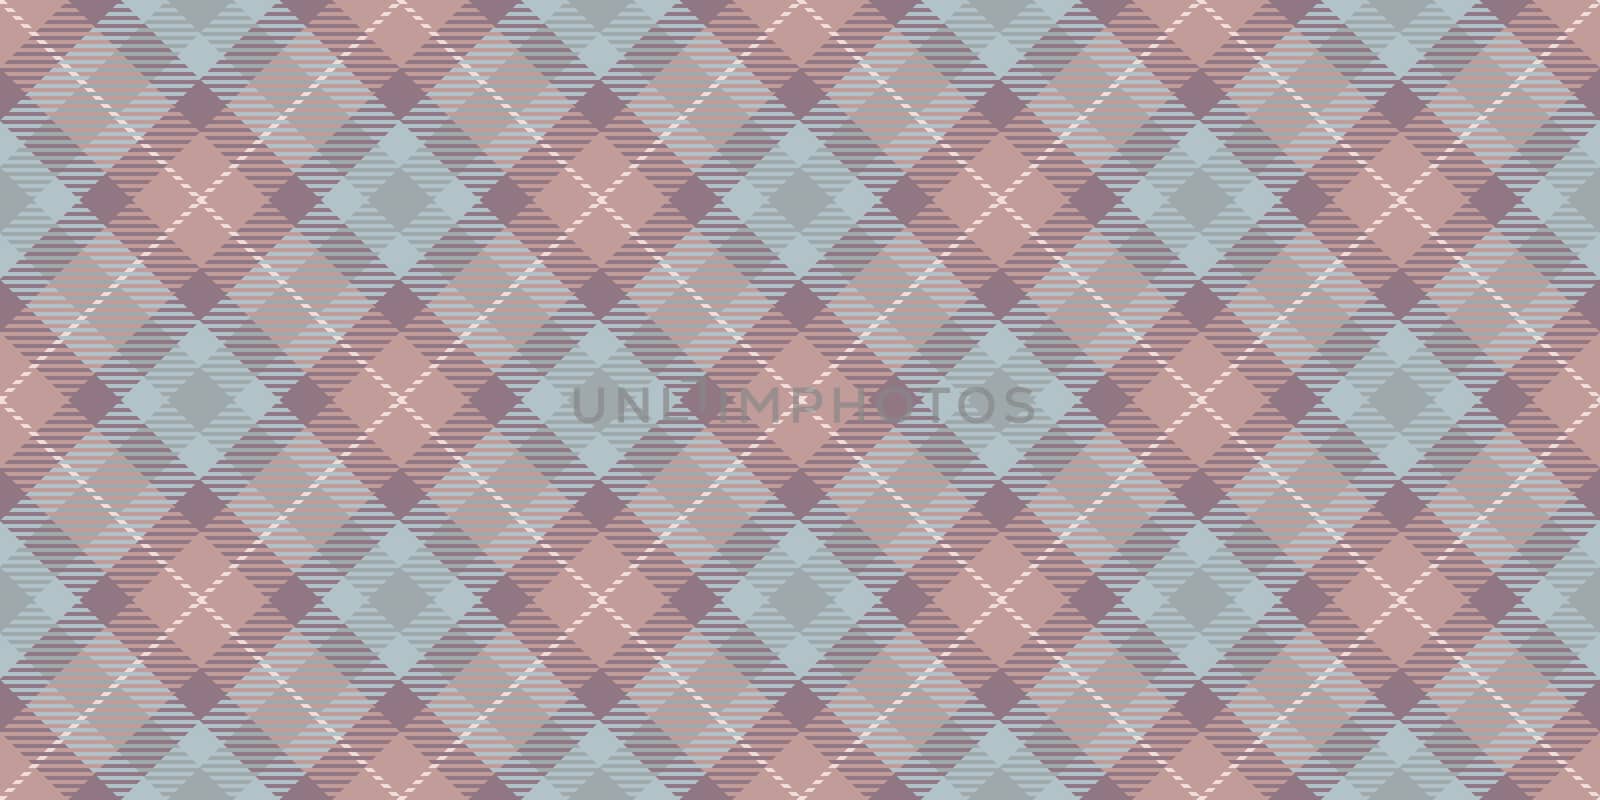 Weathered Seamless Checkered Rhombuses Pattern. Plaid Rug Background. Tartan Texture.